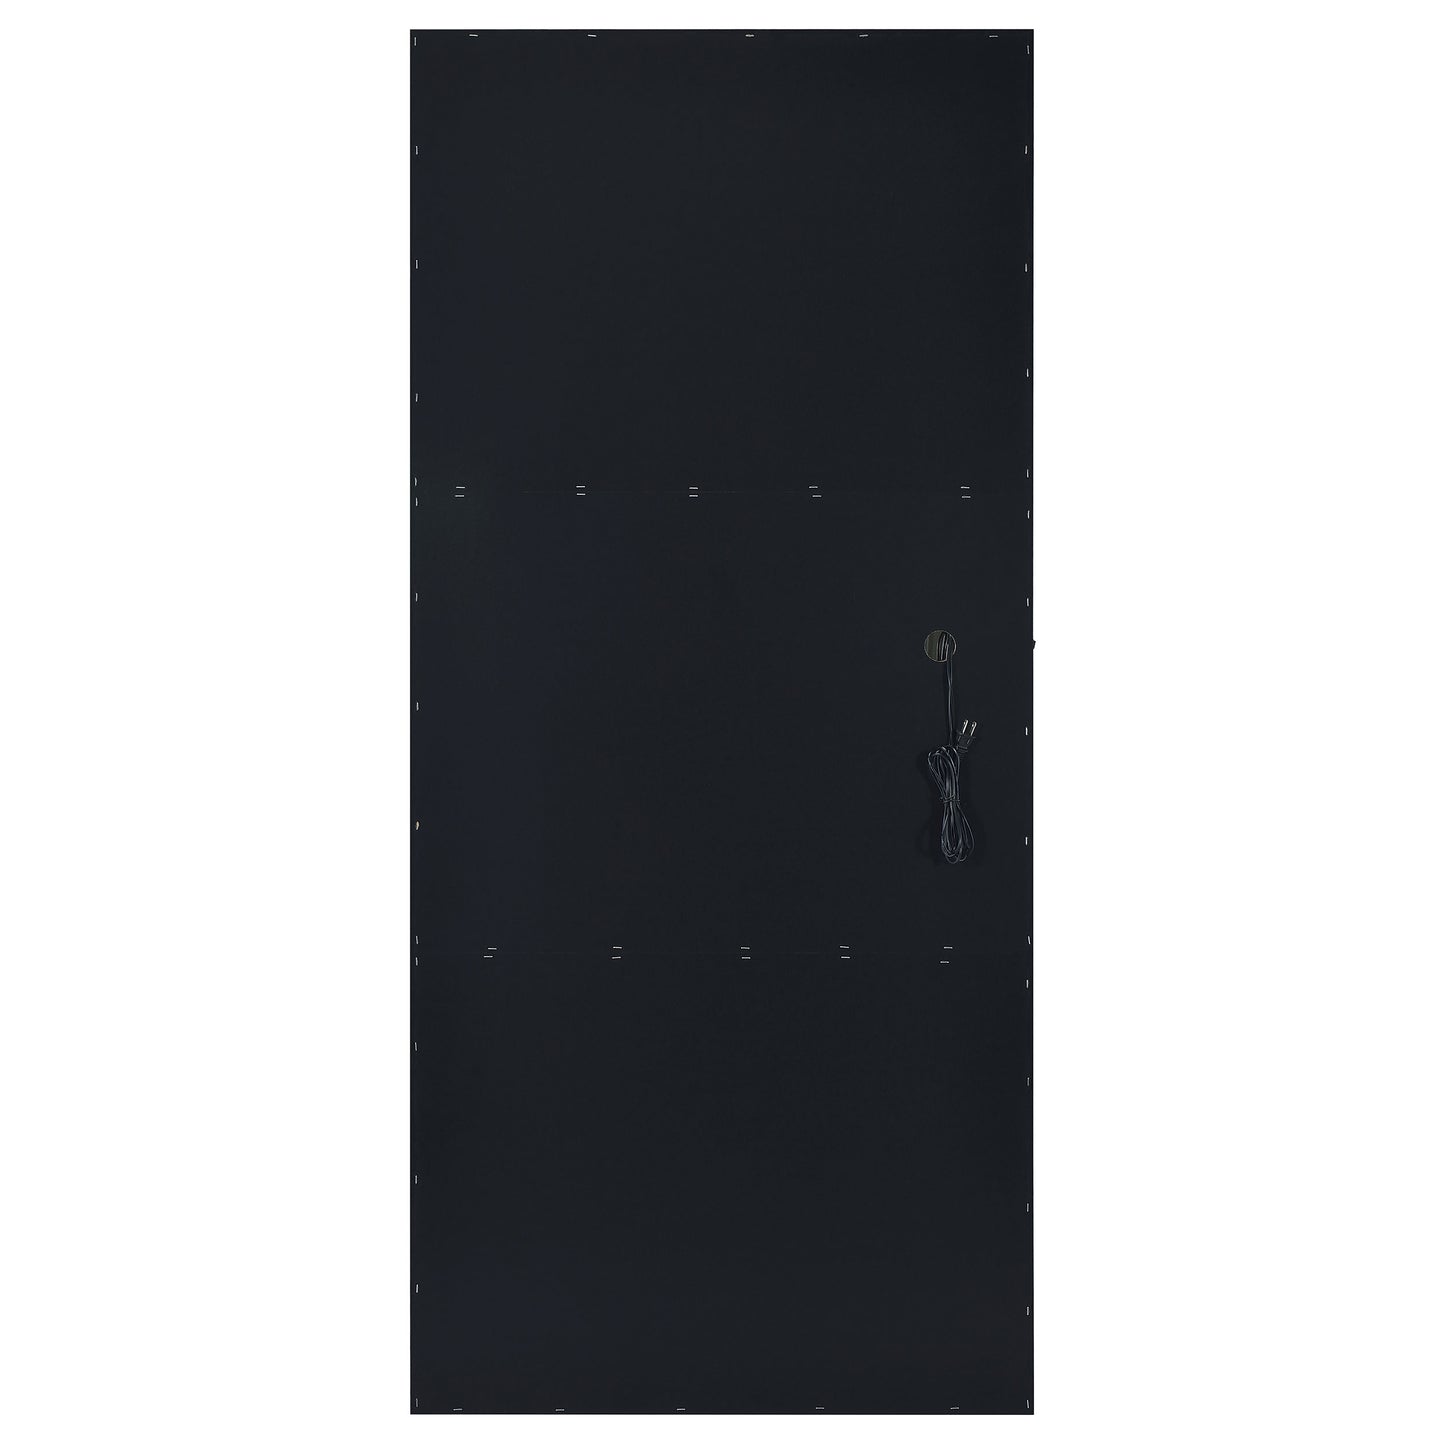 Zayan Full Length Floor Mirror With Lighting Black High Gloss